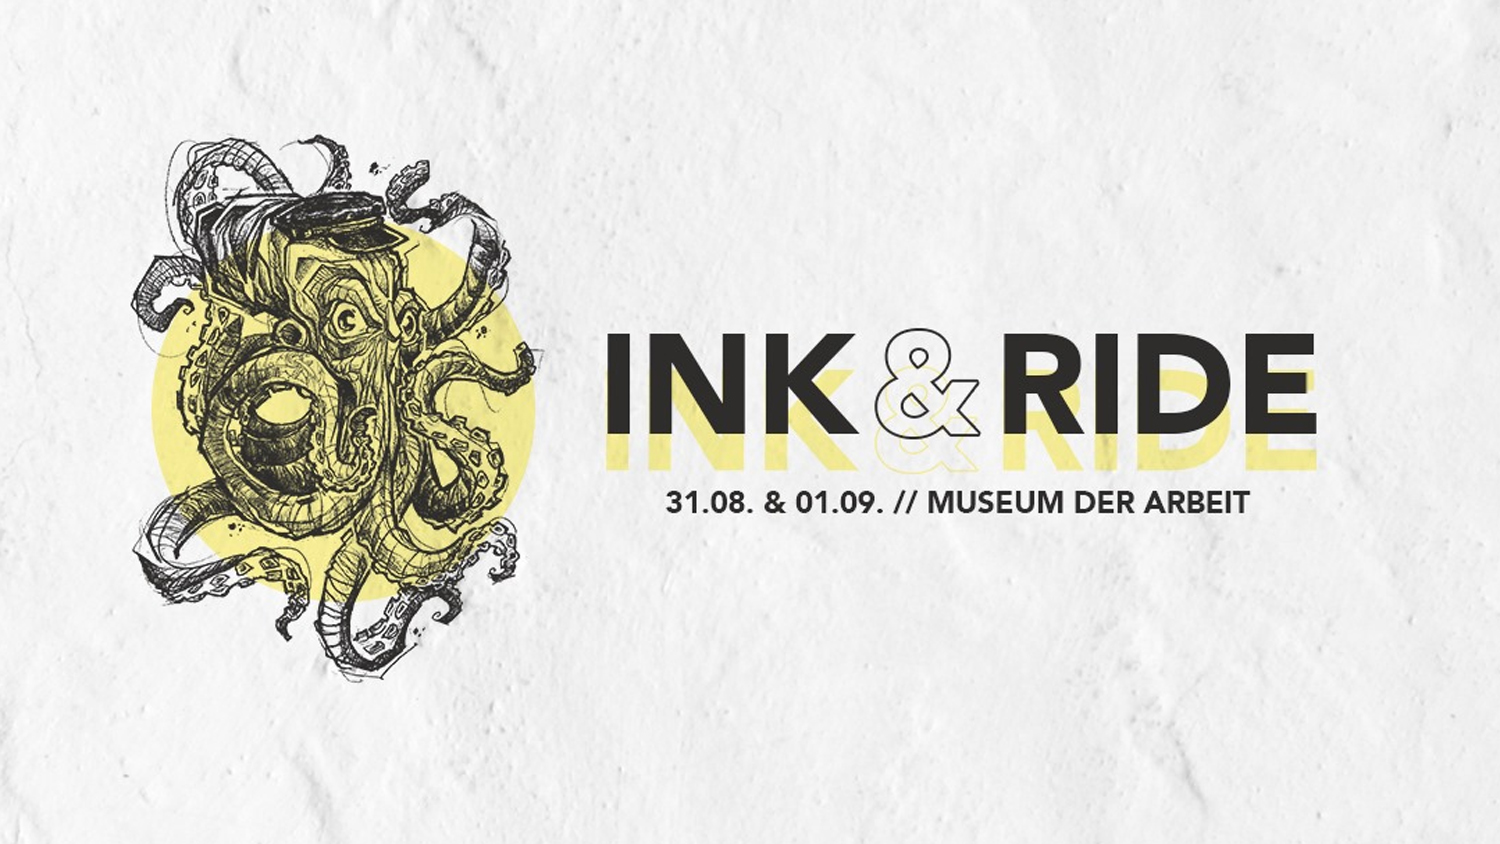 Ink & Ride 2019